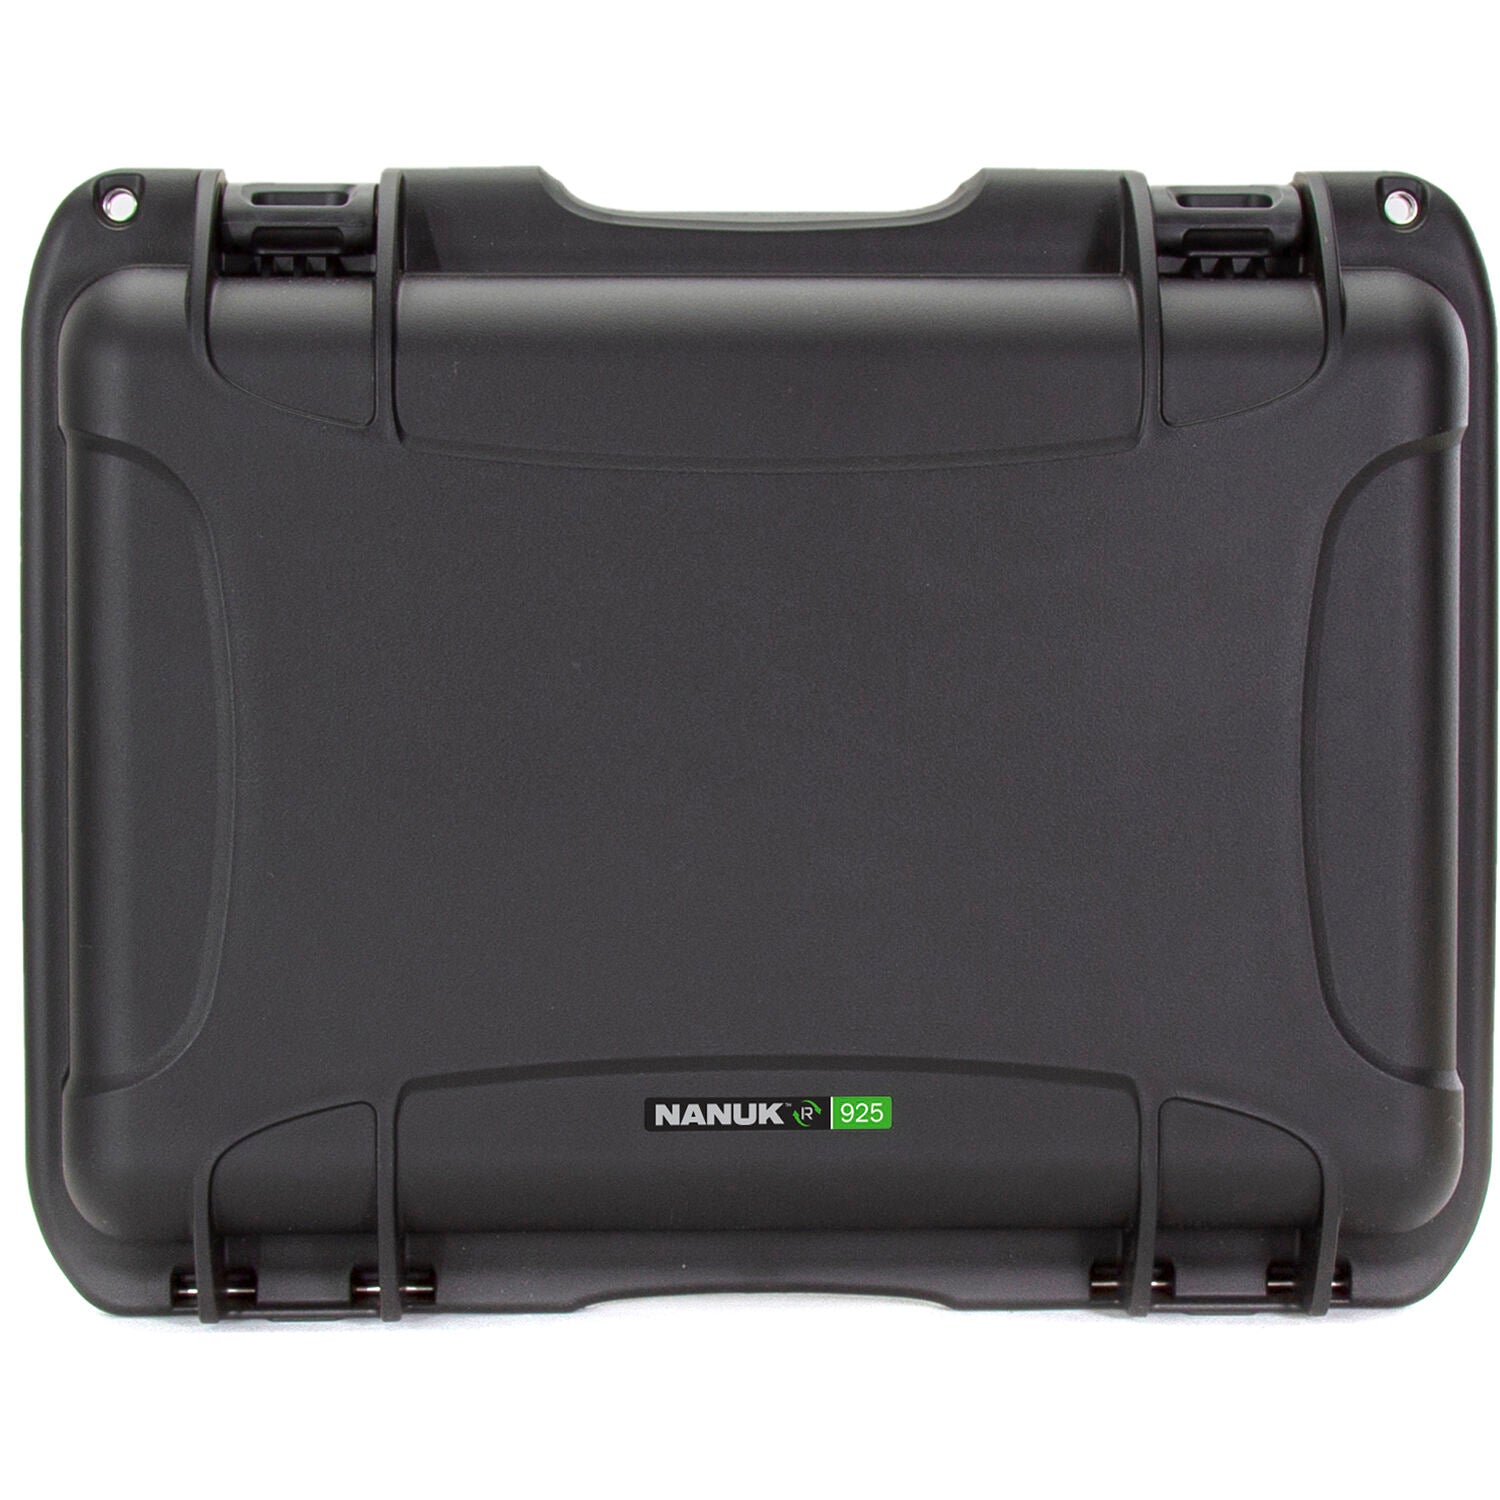 Nanuk R 925 Eco-Friendly Hard Case (Black, 21L, Foam Insert)